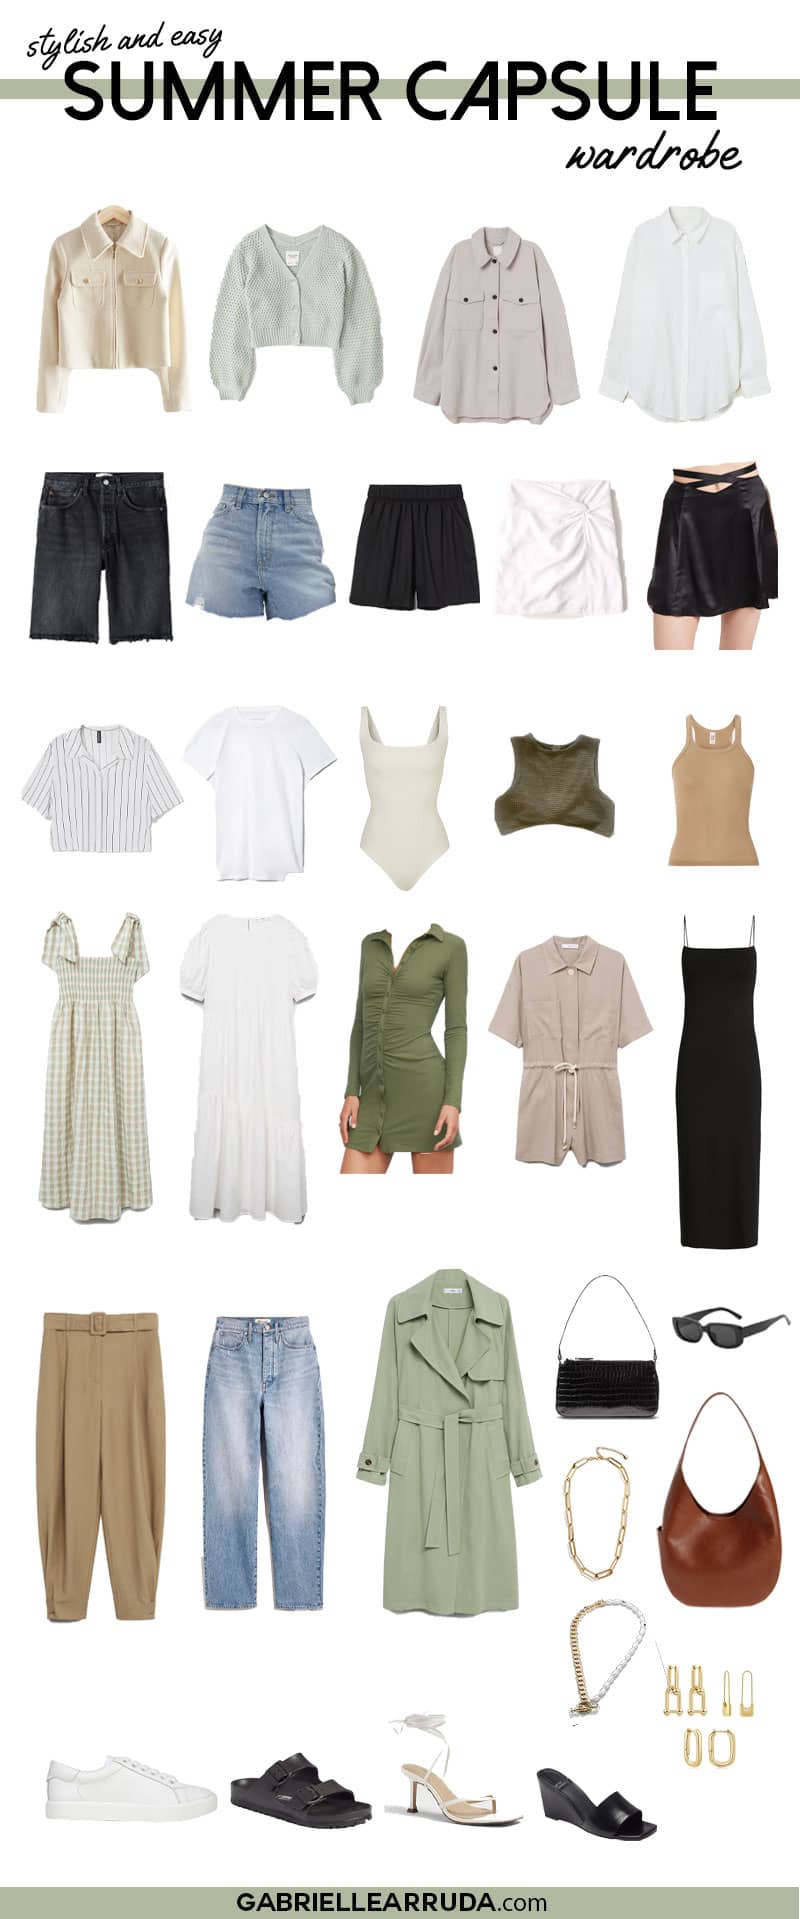 summer capsule wardrobe 2021 essential items